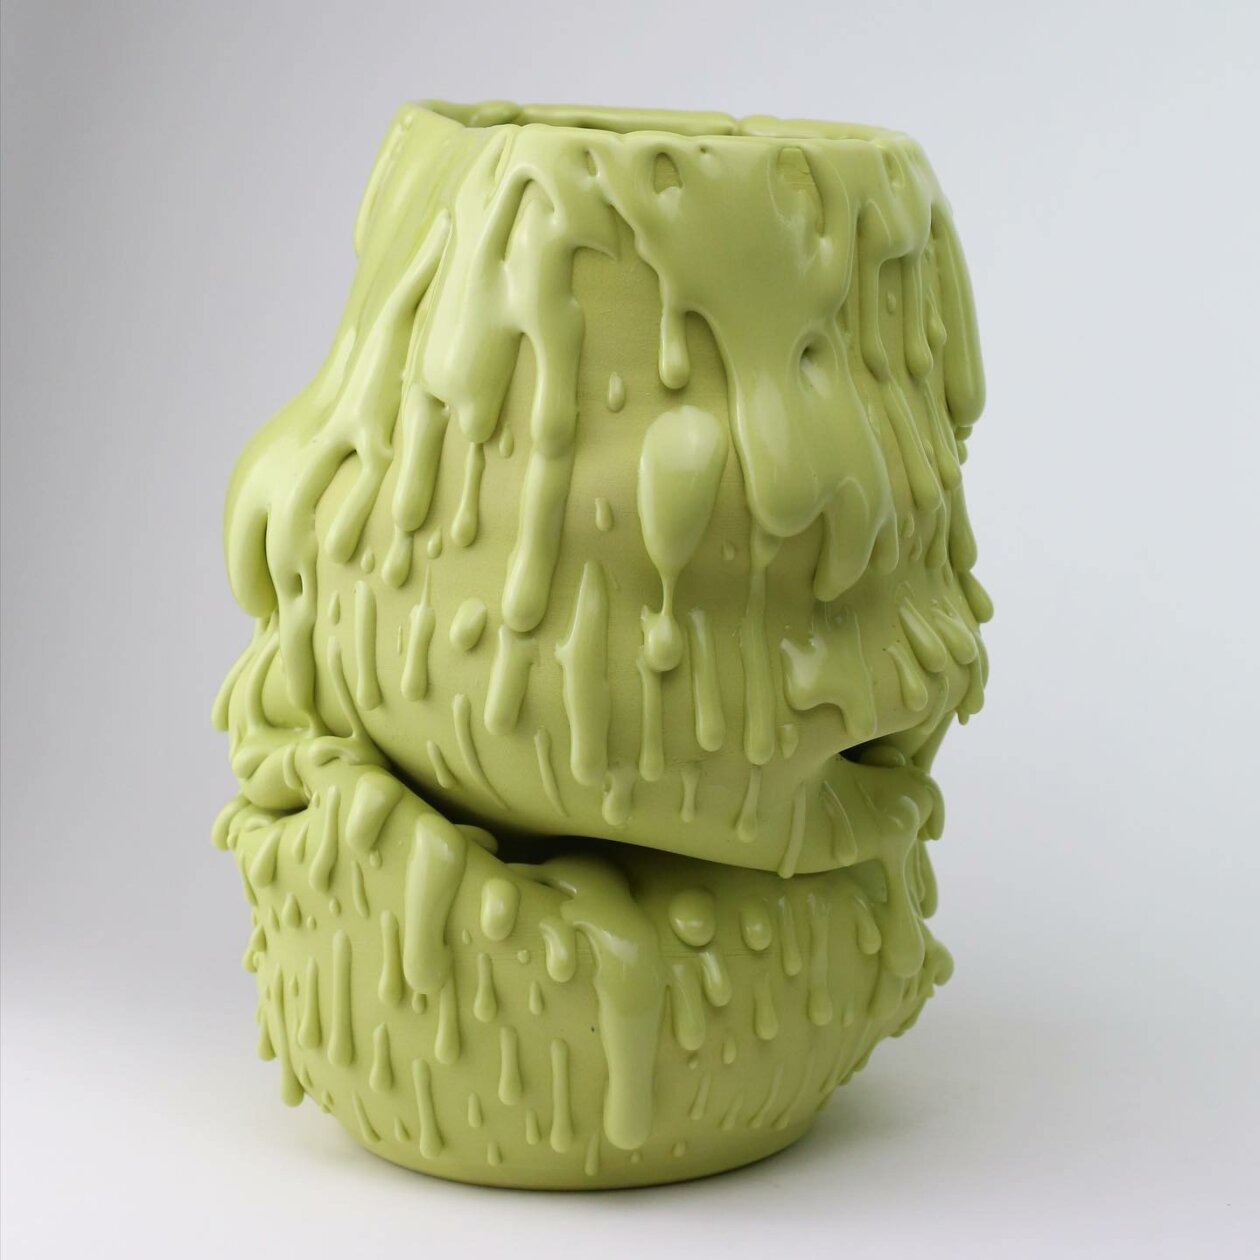 Playful Ceramic Vessels Of Strange Creatures And Melted Shapes By Philip Kupferschmidt 4